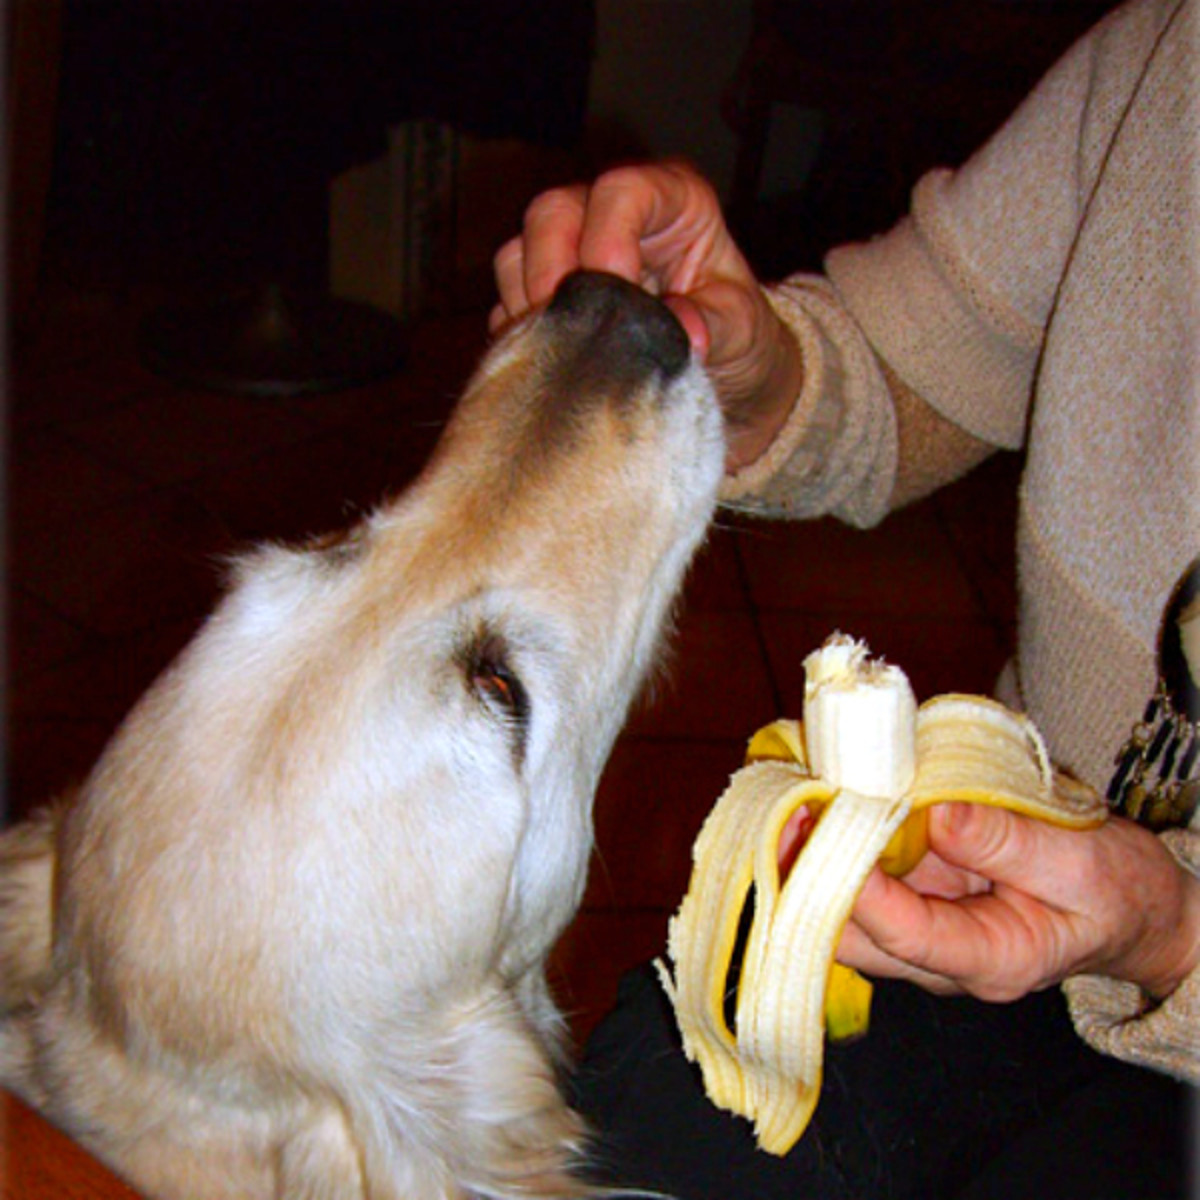 Dog eating bananas